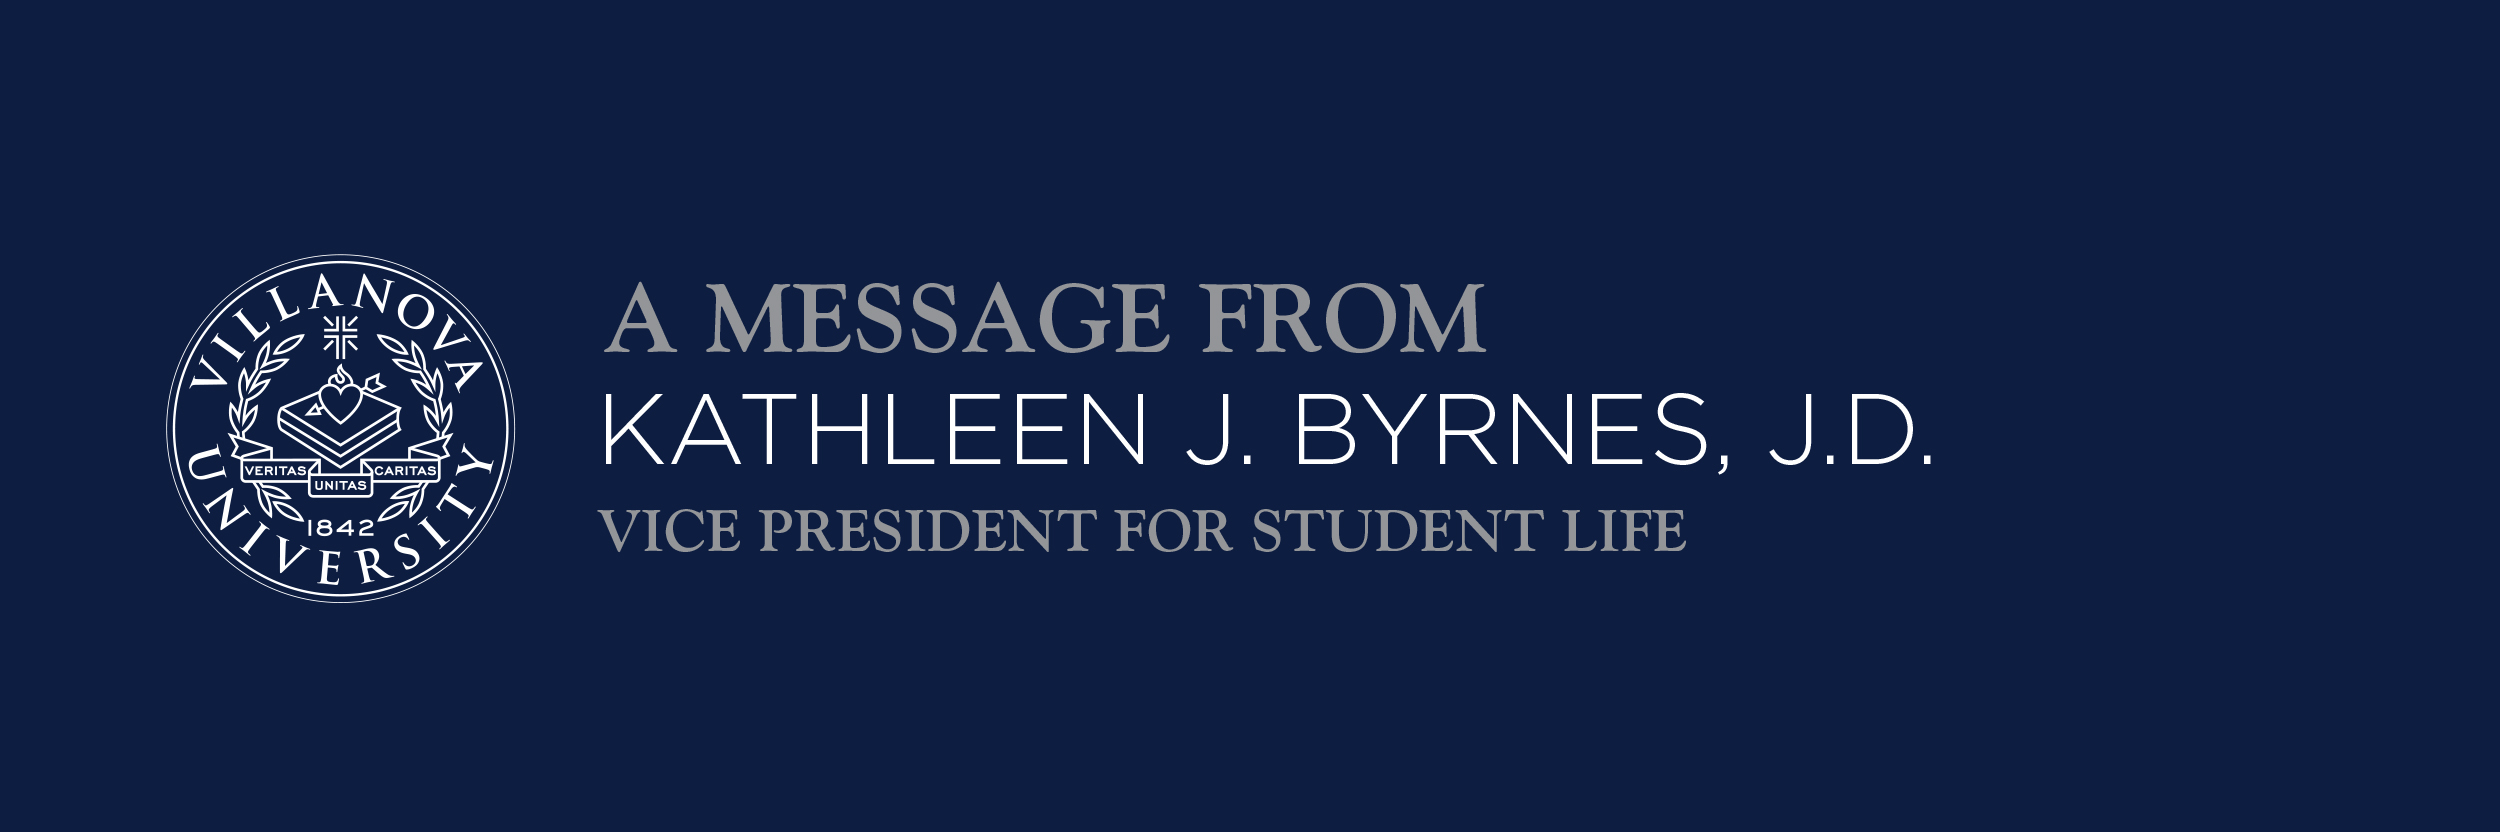 Kathleen J. Byrnes email header